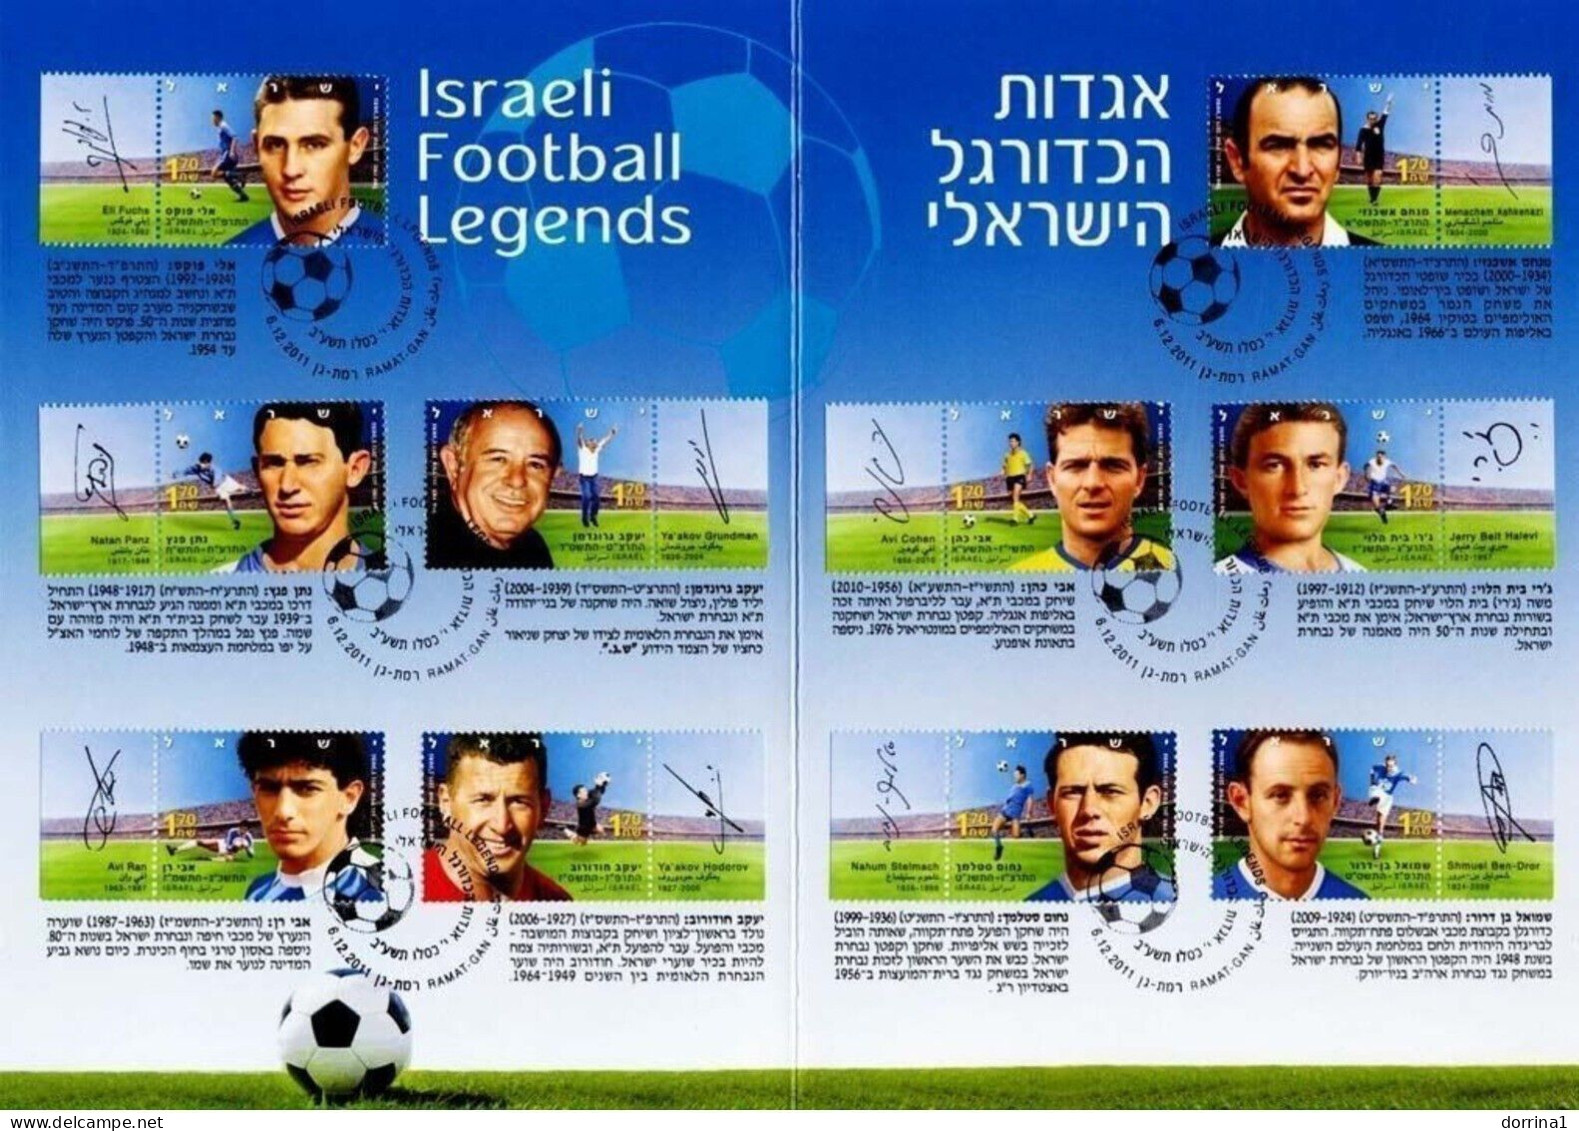 Israel 2011 Football League 80th Anniversary Souvenir Leaf Soccer SPORT - Covers & Documents